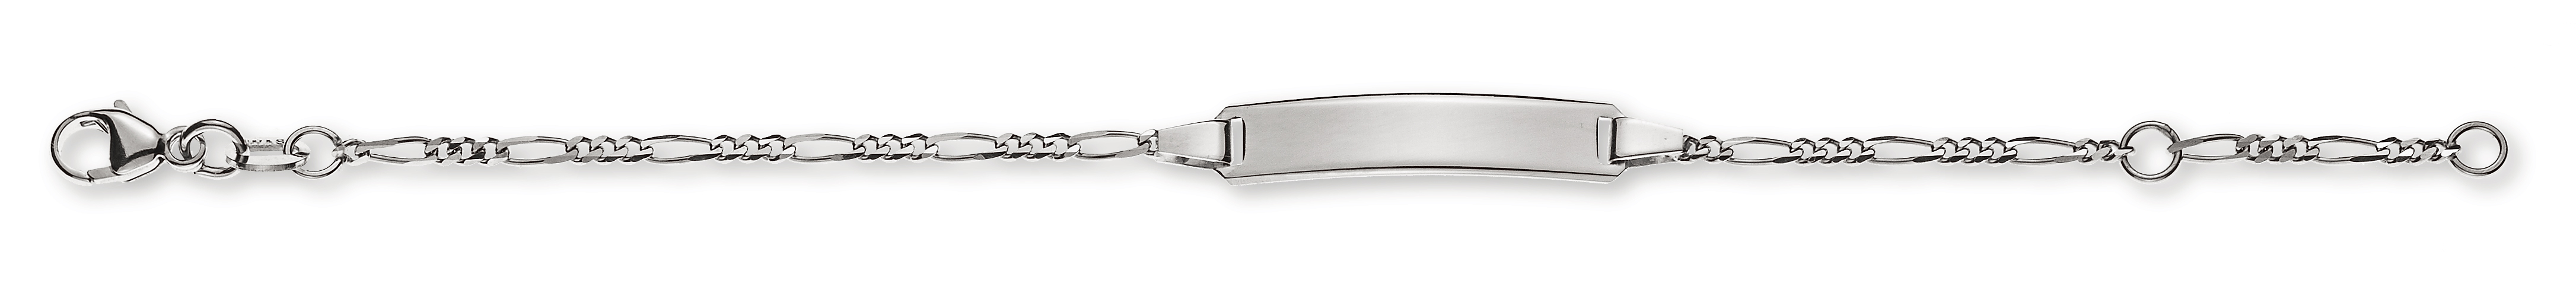 AURONOS Élégance ID-Bracelet en or blanc 14k Chaîne Figaro 18cm